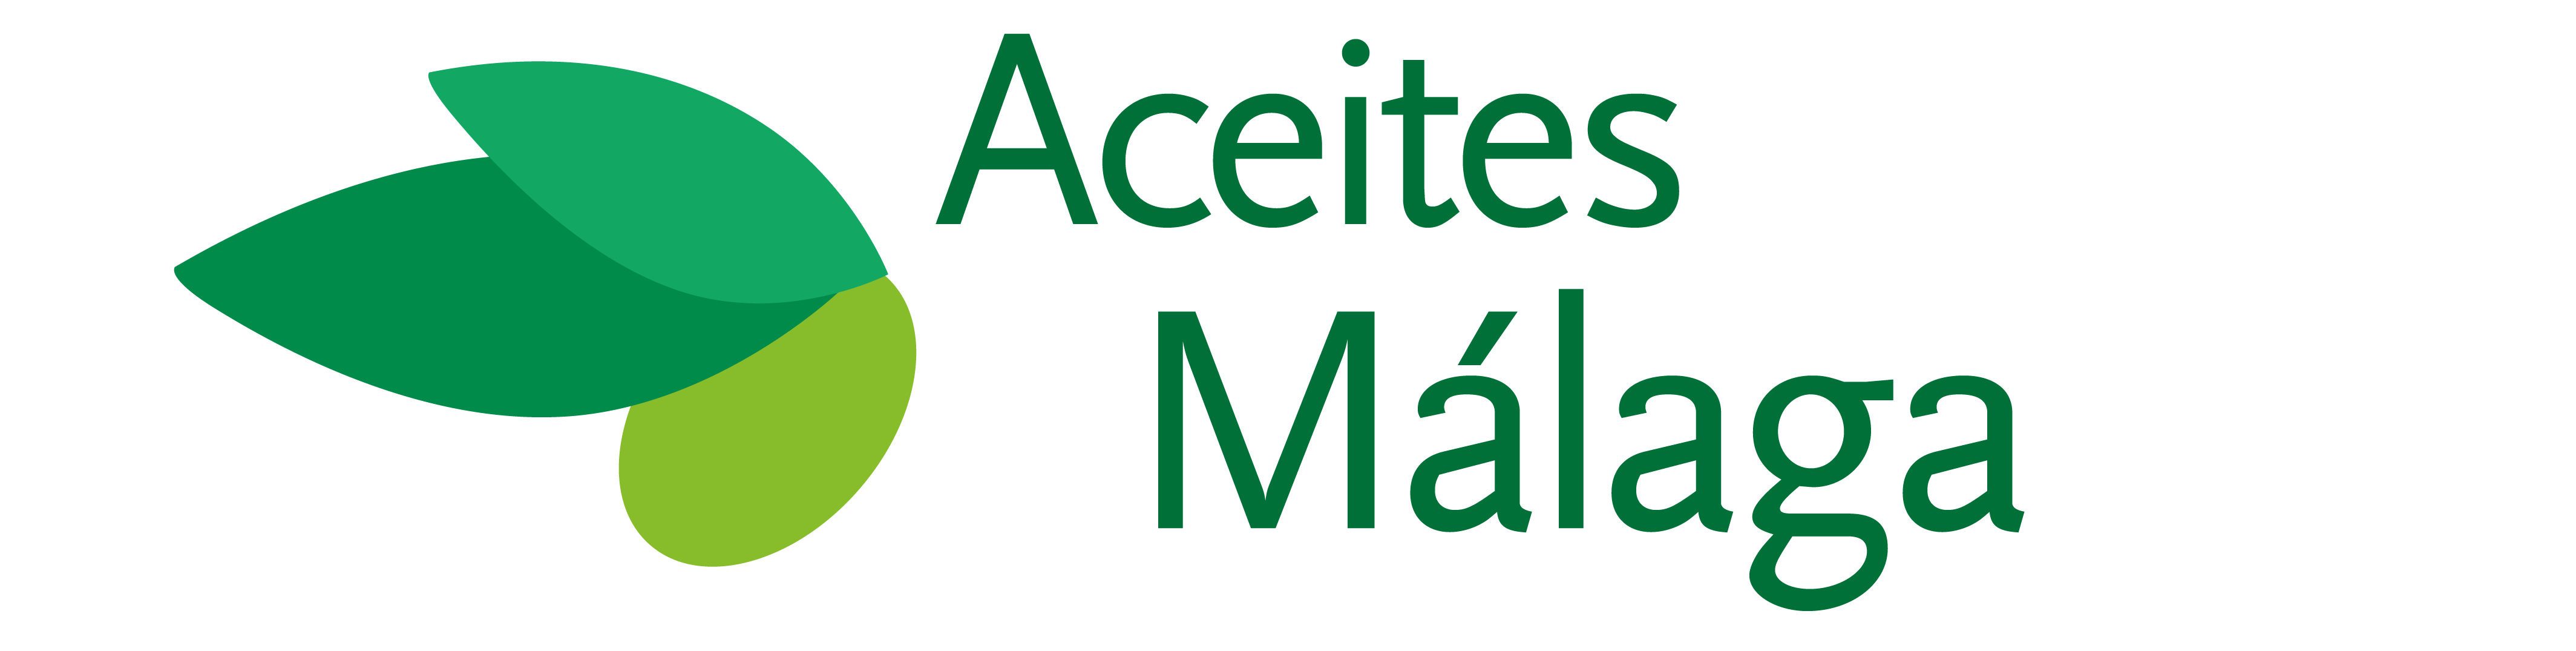 Aceites Malaga